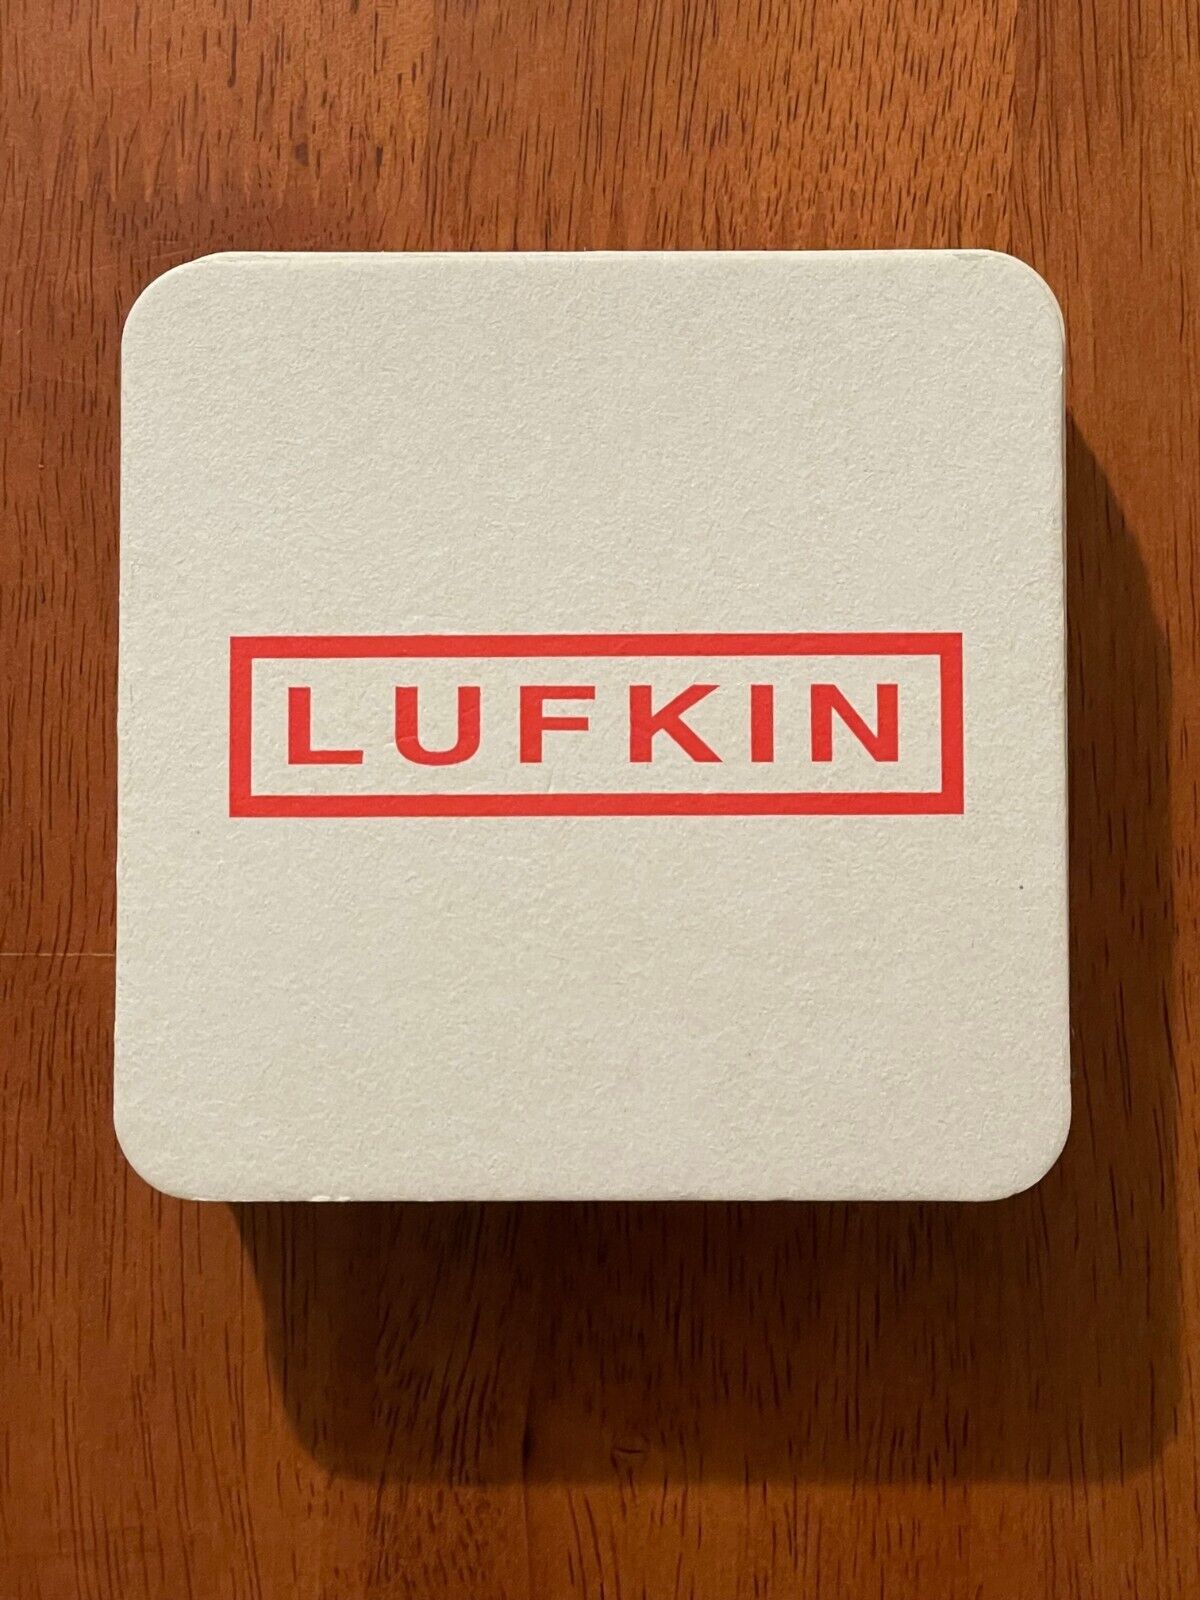 25 PC Vintage Cardboard Drink Coasters, "Lufkin", Lufkin Industries Logo, 4 X 4" Lufkin Industries Logo